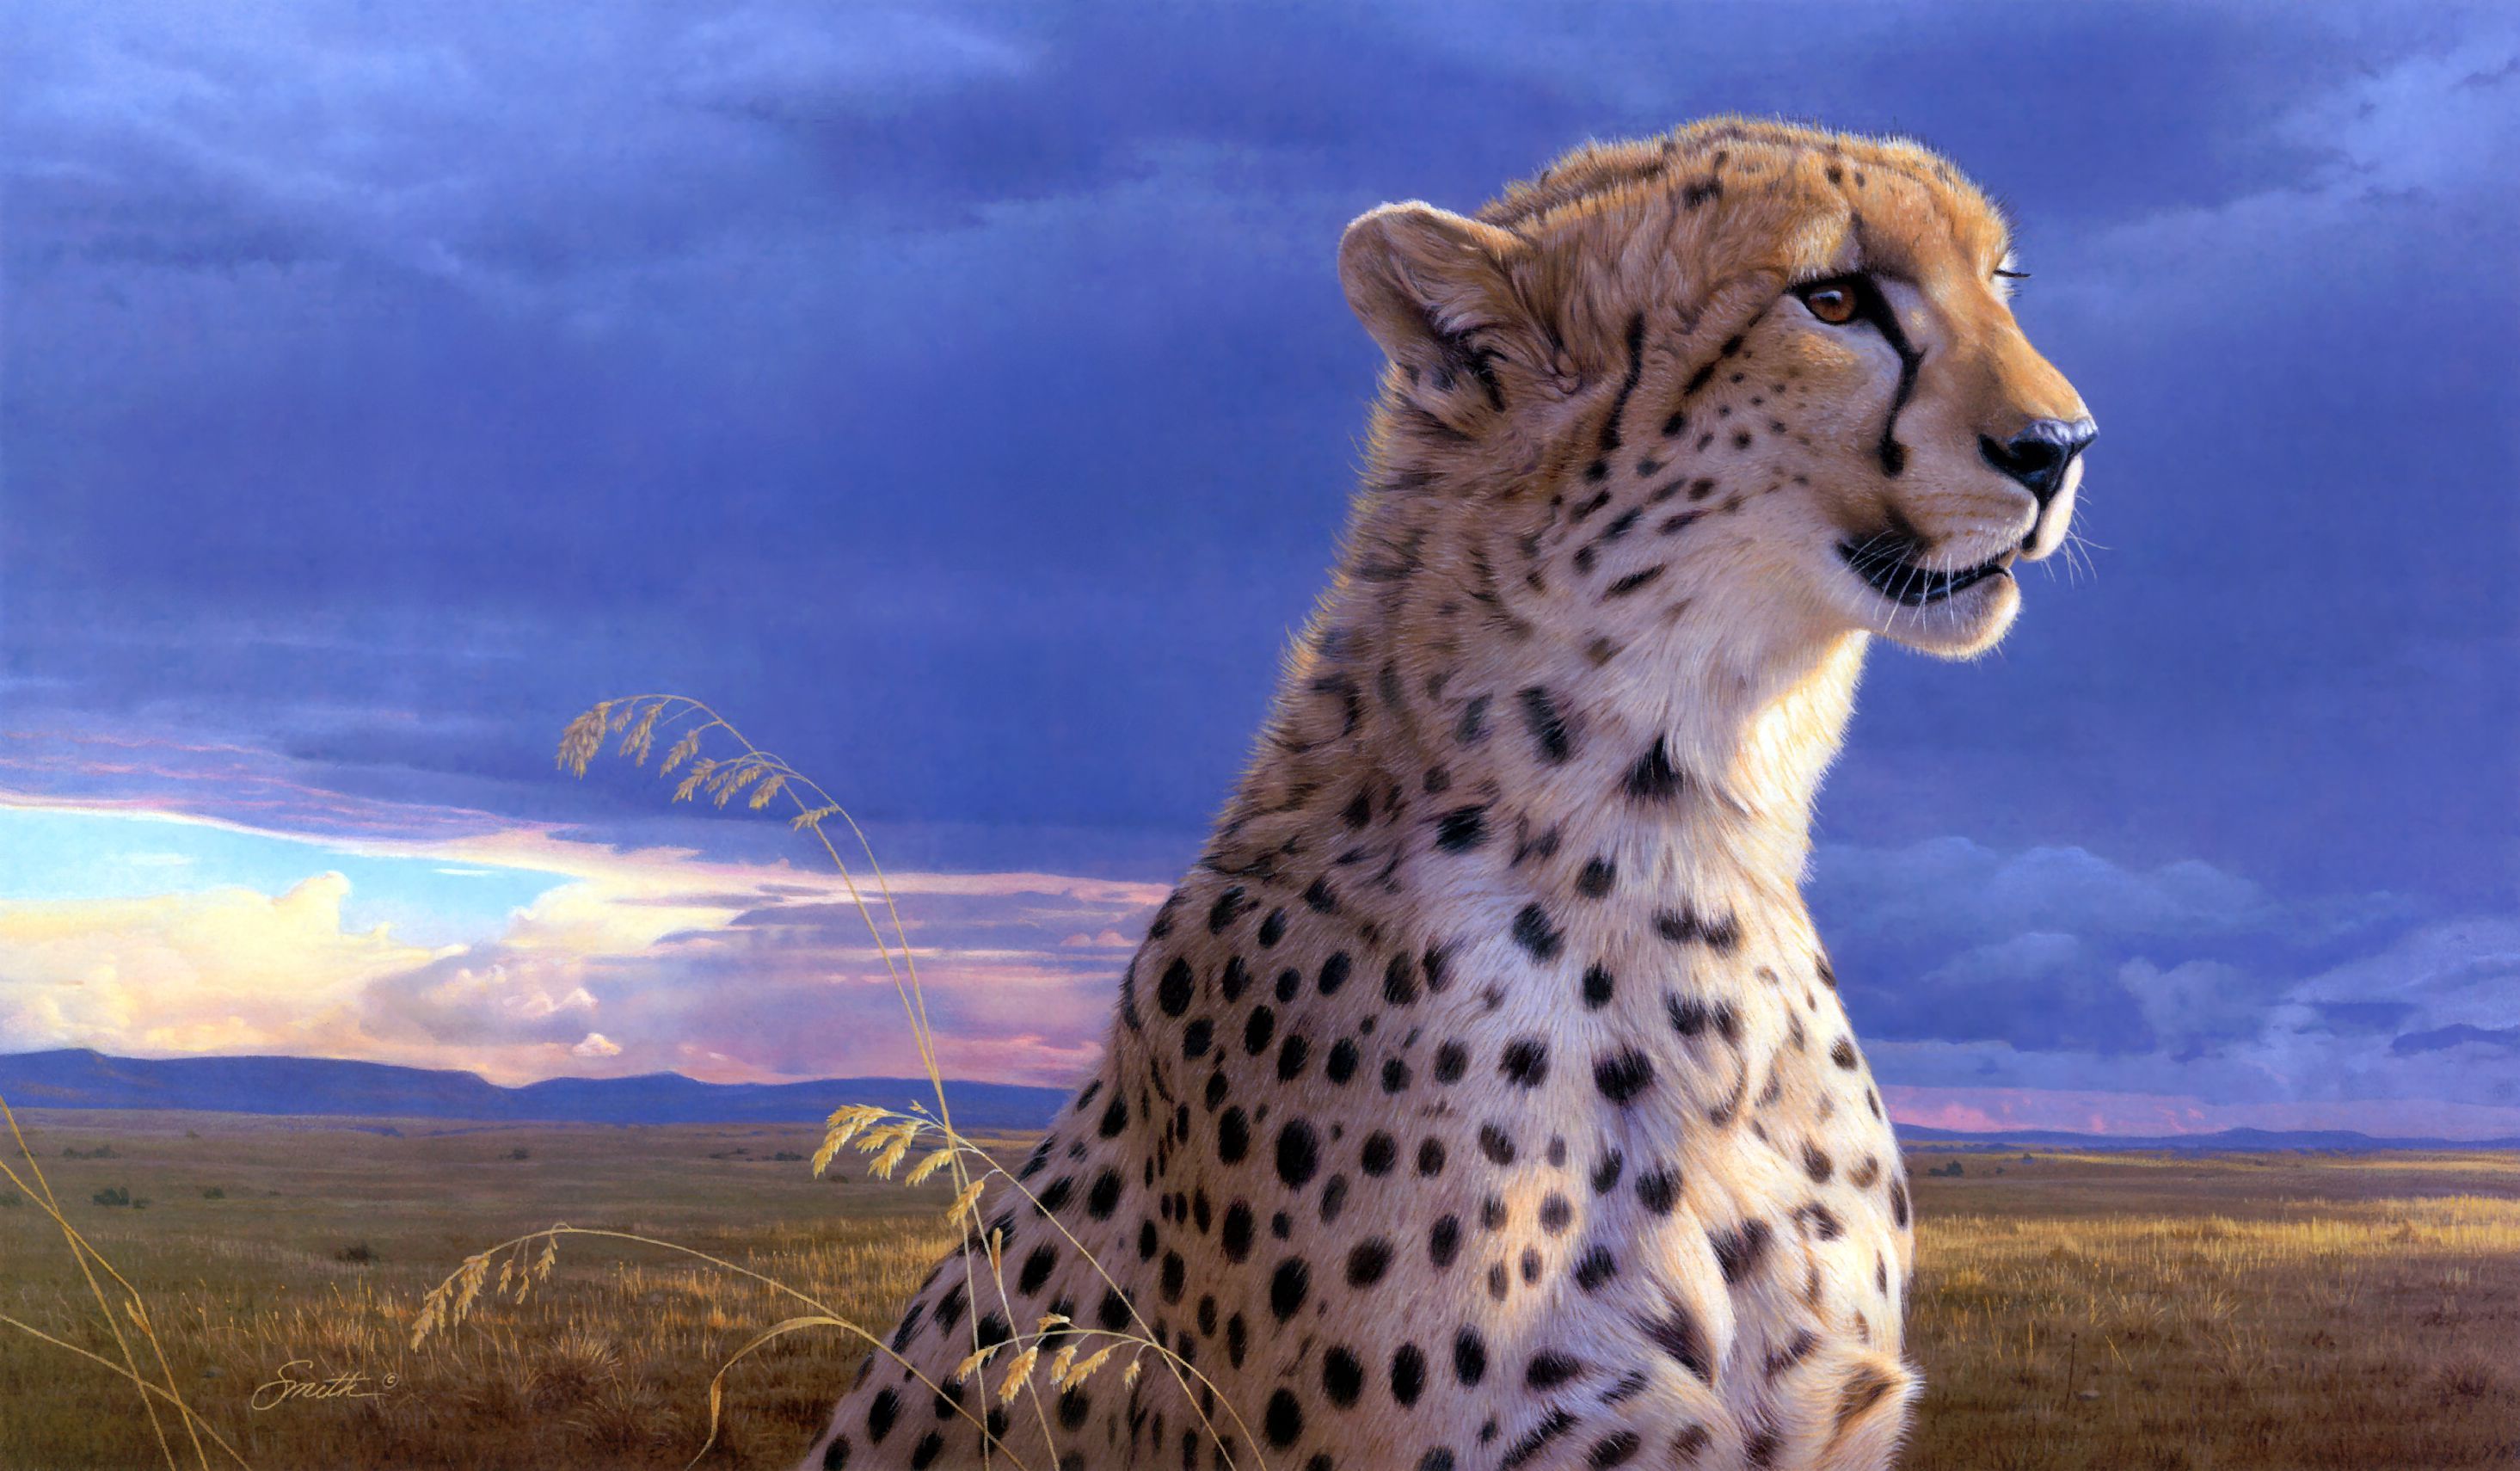 Wallpapers of cheetah